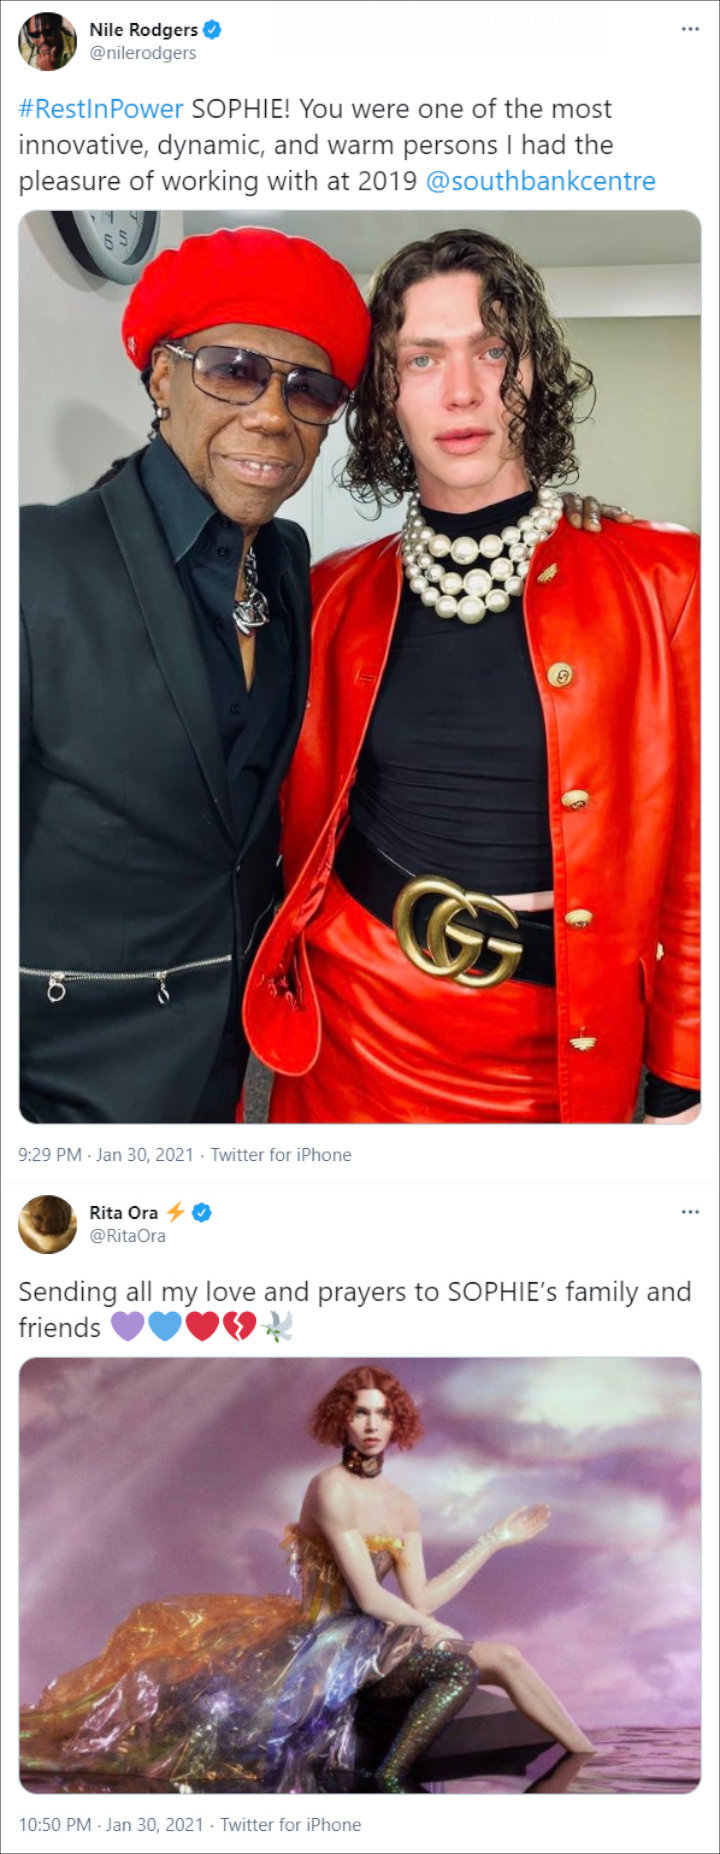 Nile Rodgers and Rita Ora's Tweets